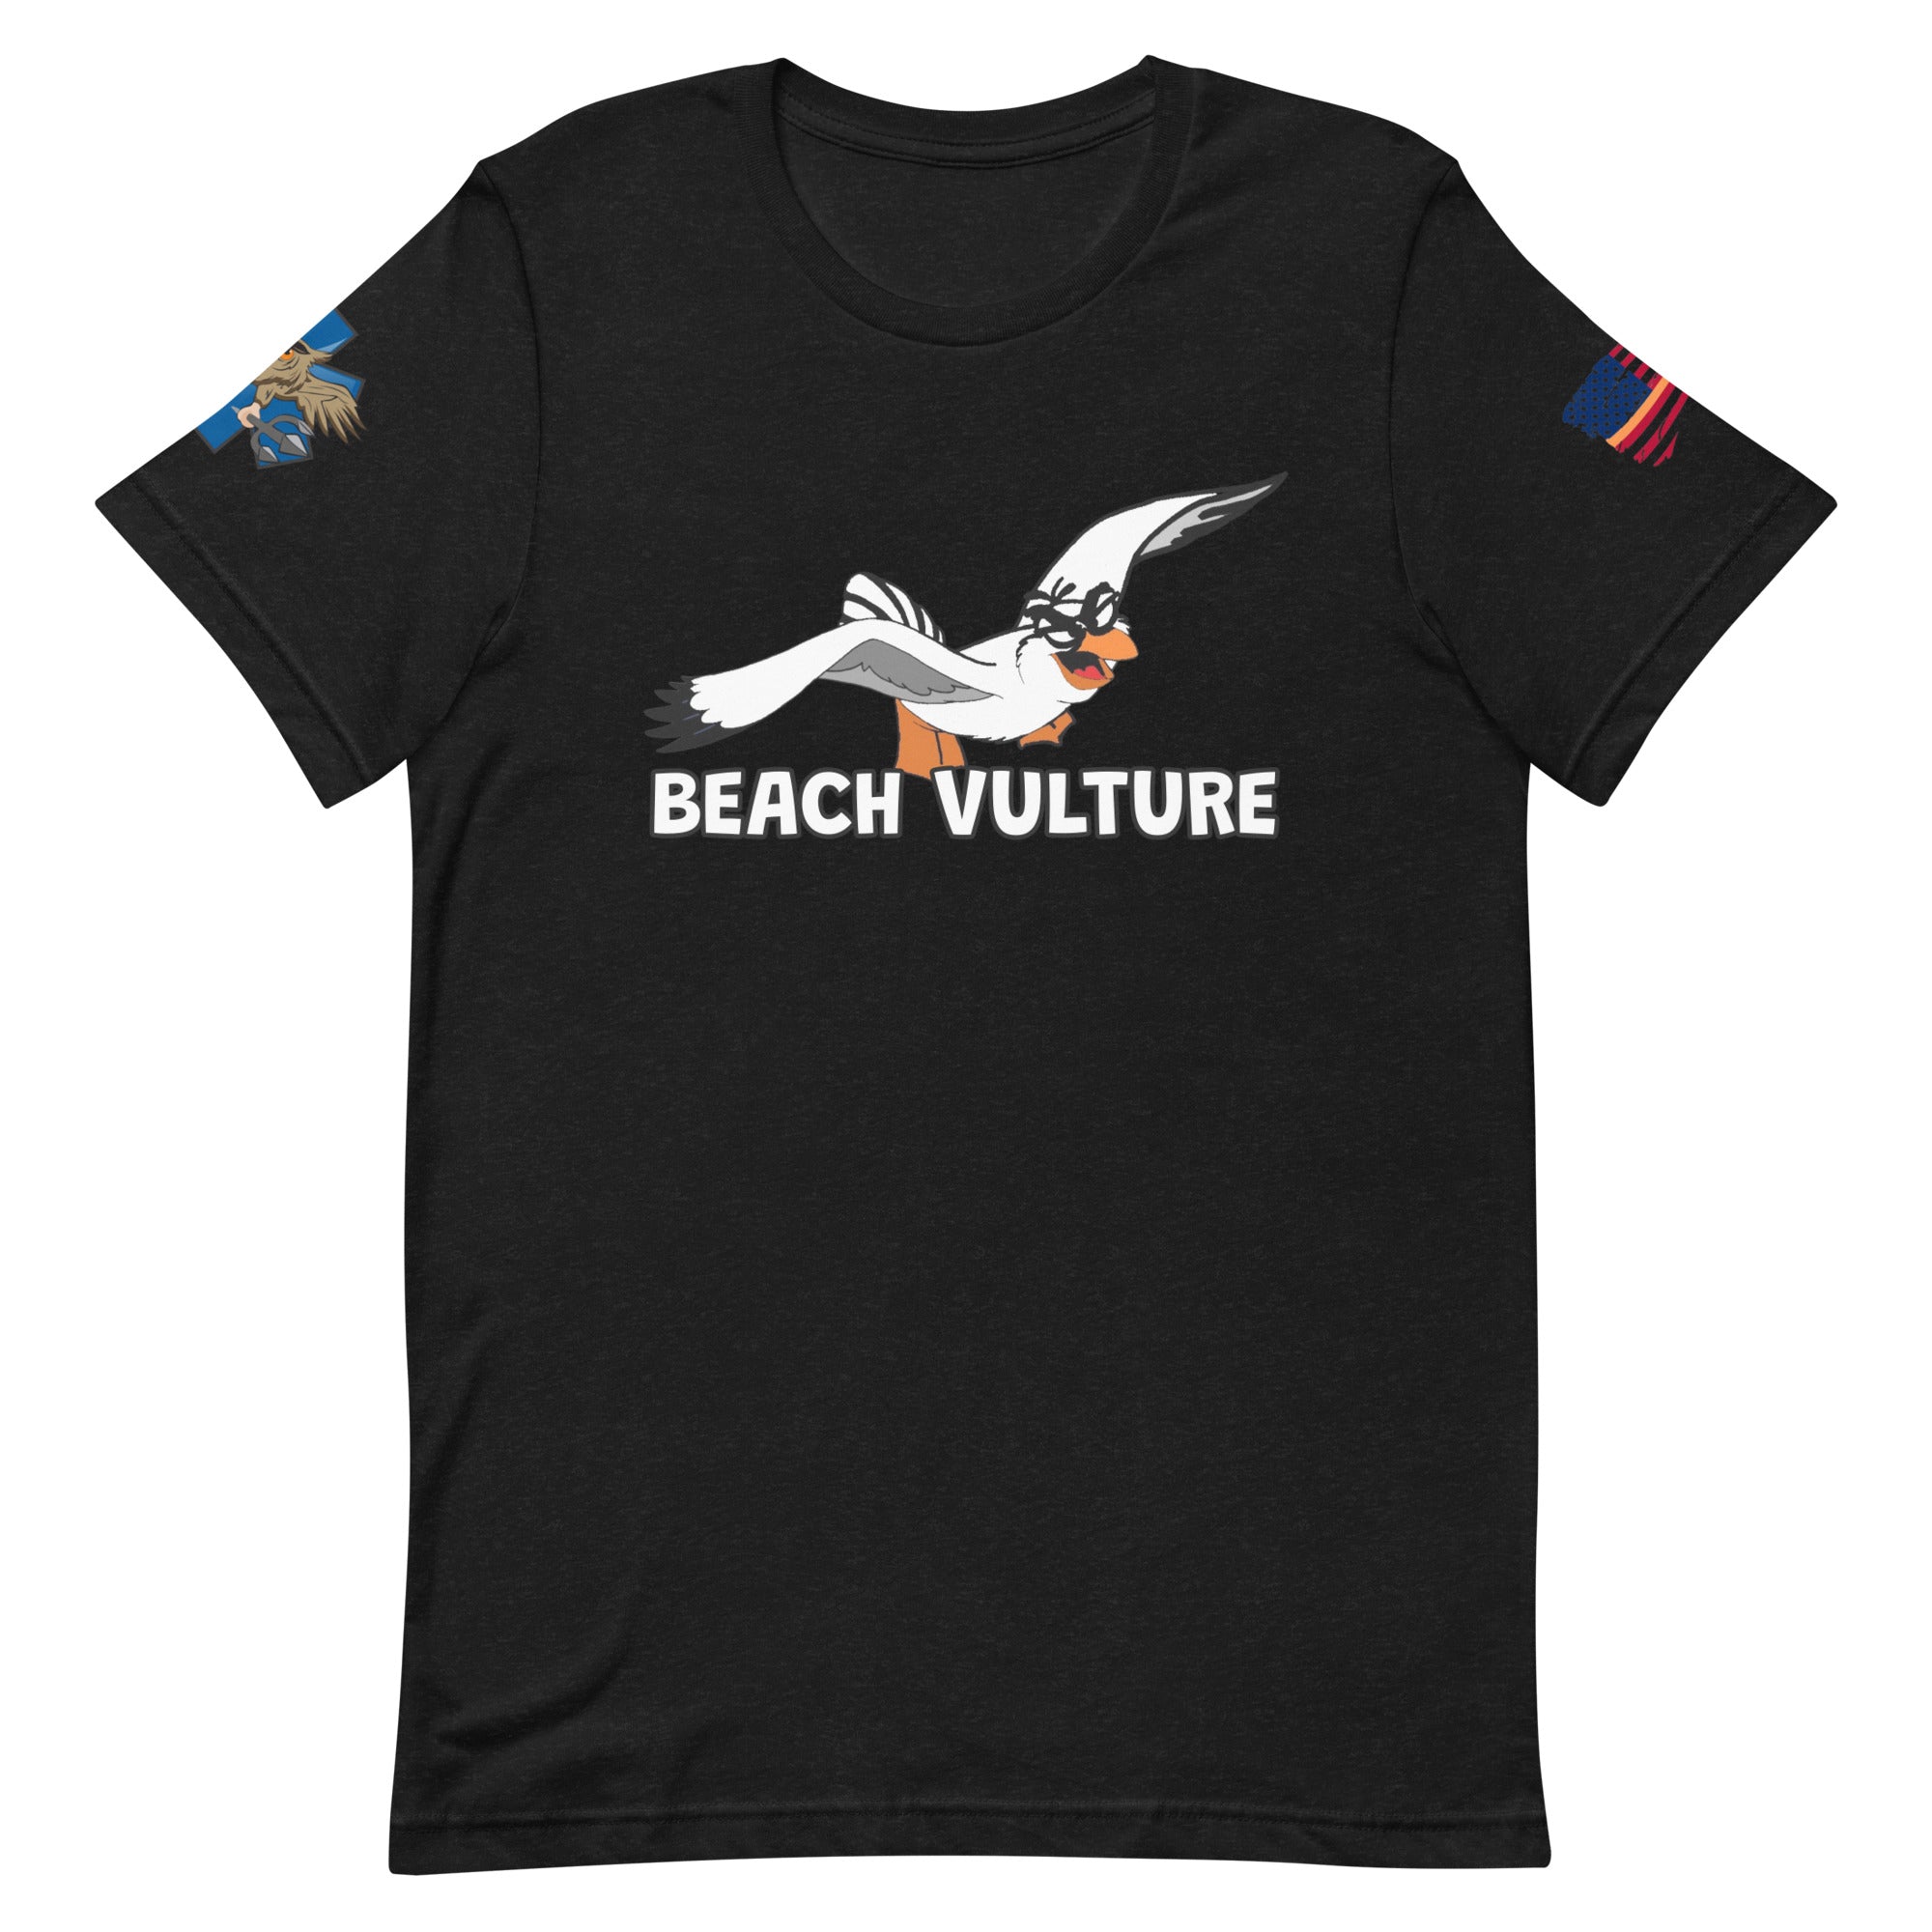 'Beach Vulture' t-shirt